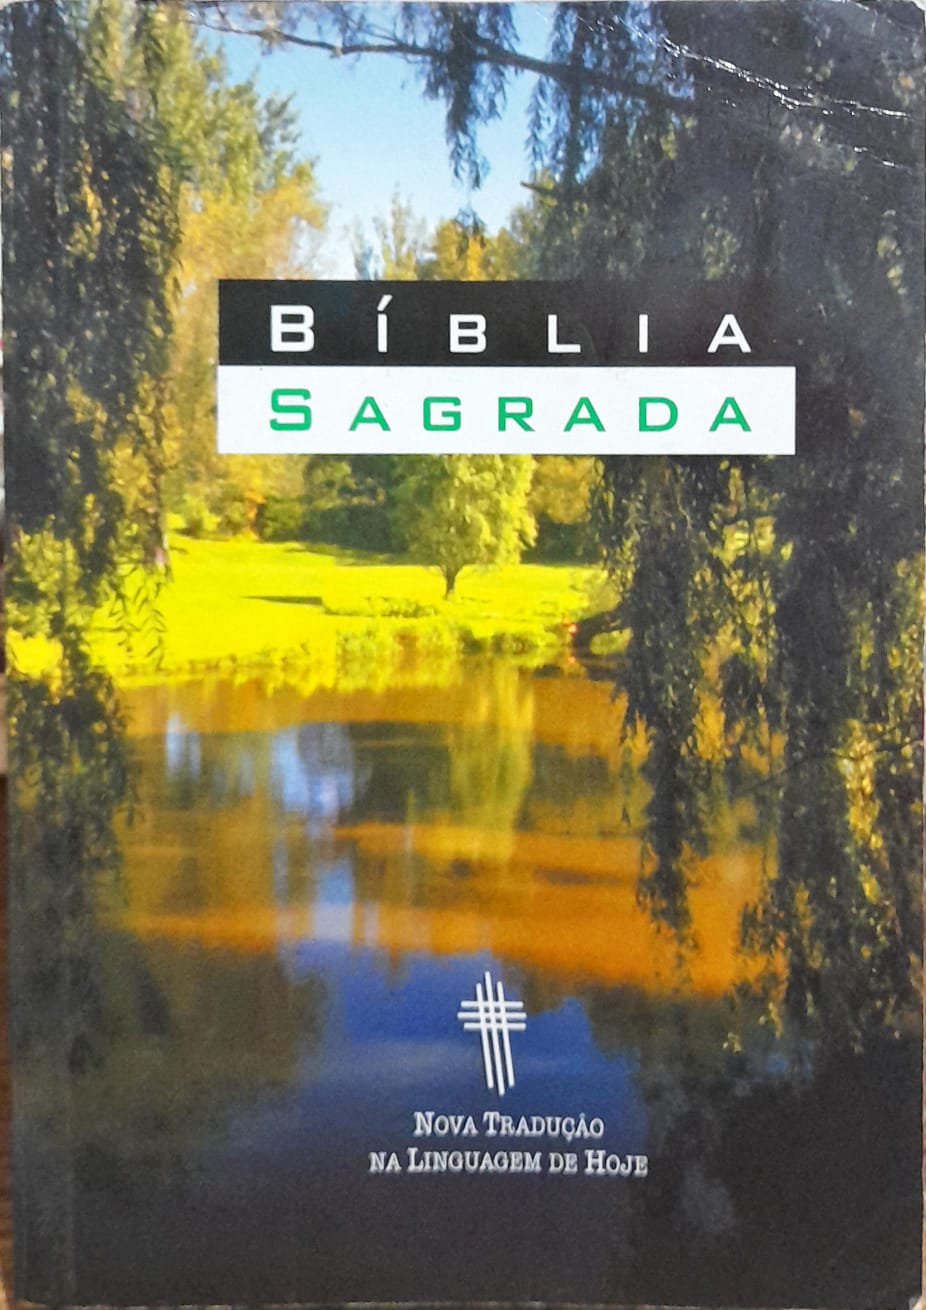 Biblia Sagradaova Traducao na Liguagem de Hoje LIKE NEW Portfolio design